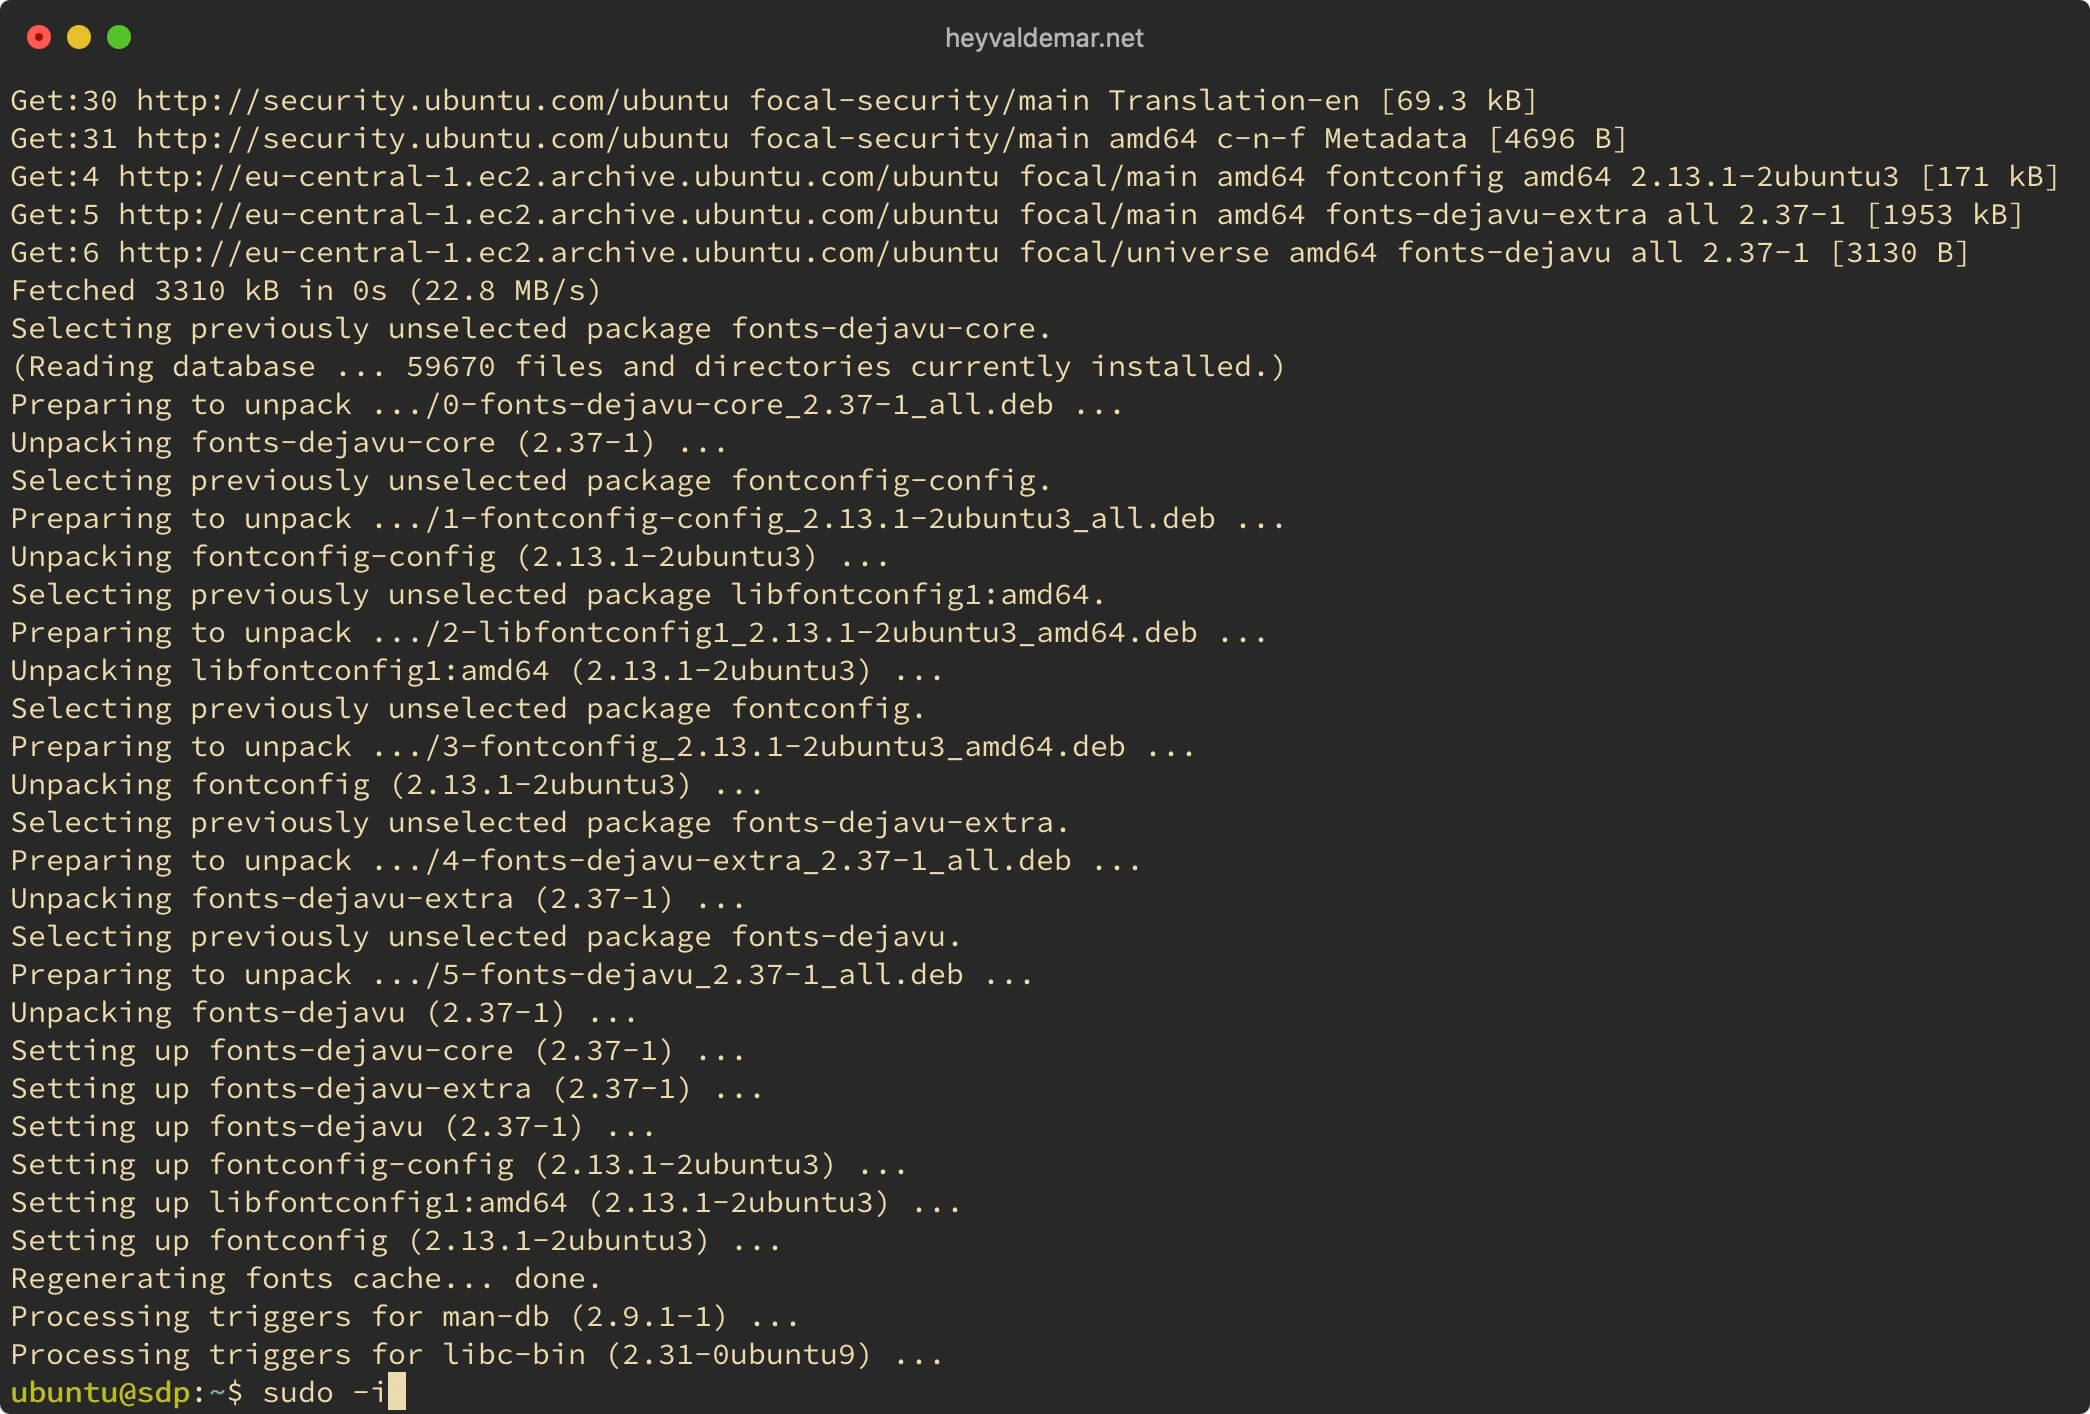 Install ServiceDesk Plus on Ubuntu Server